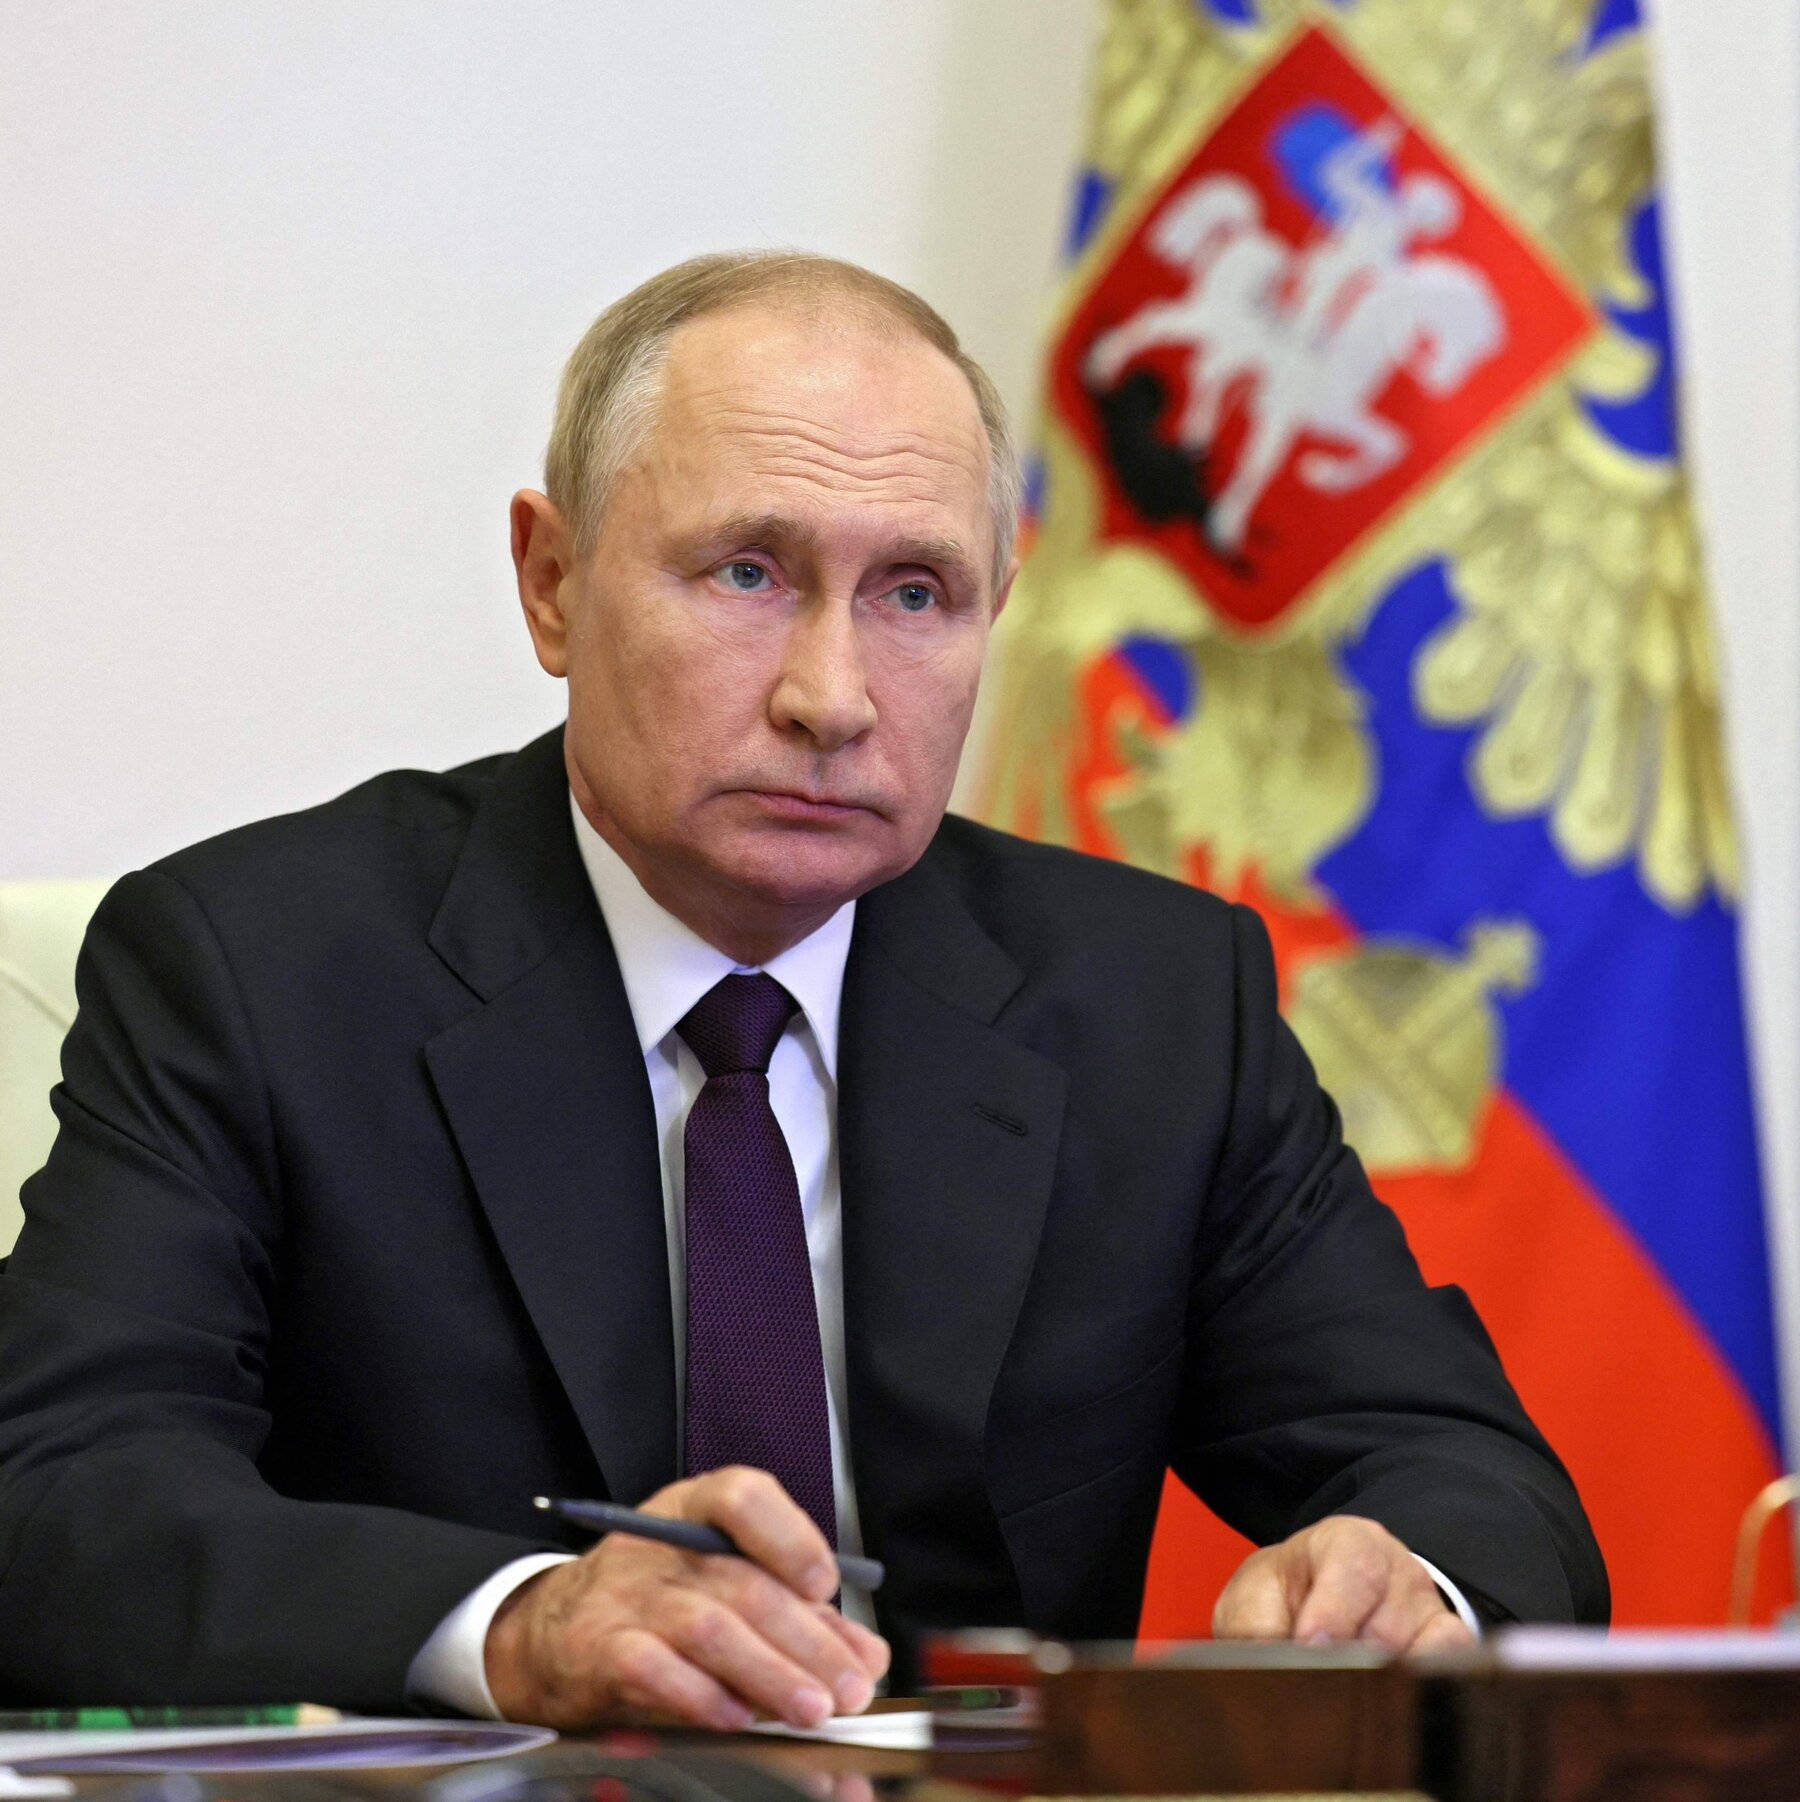 Vladimir Putin Attending Teleconference Wallpaper